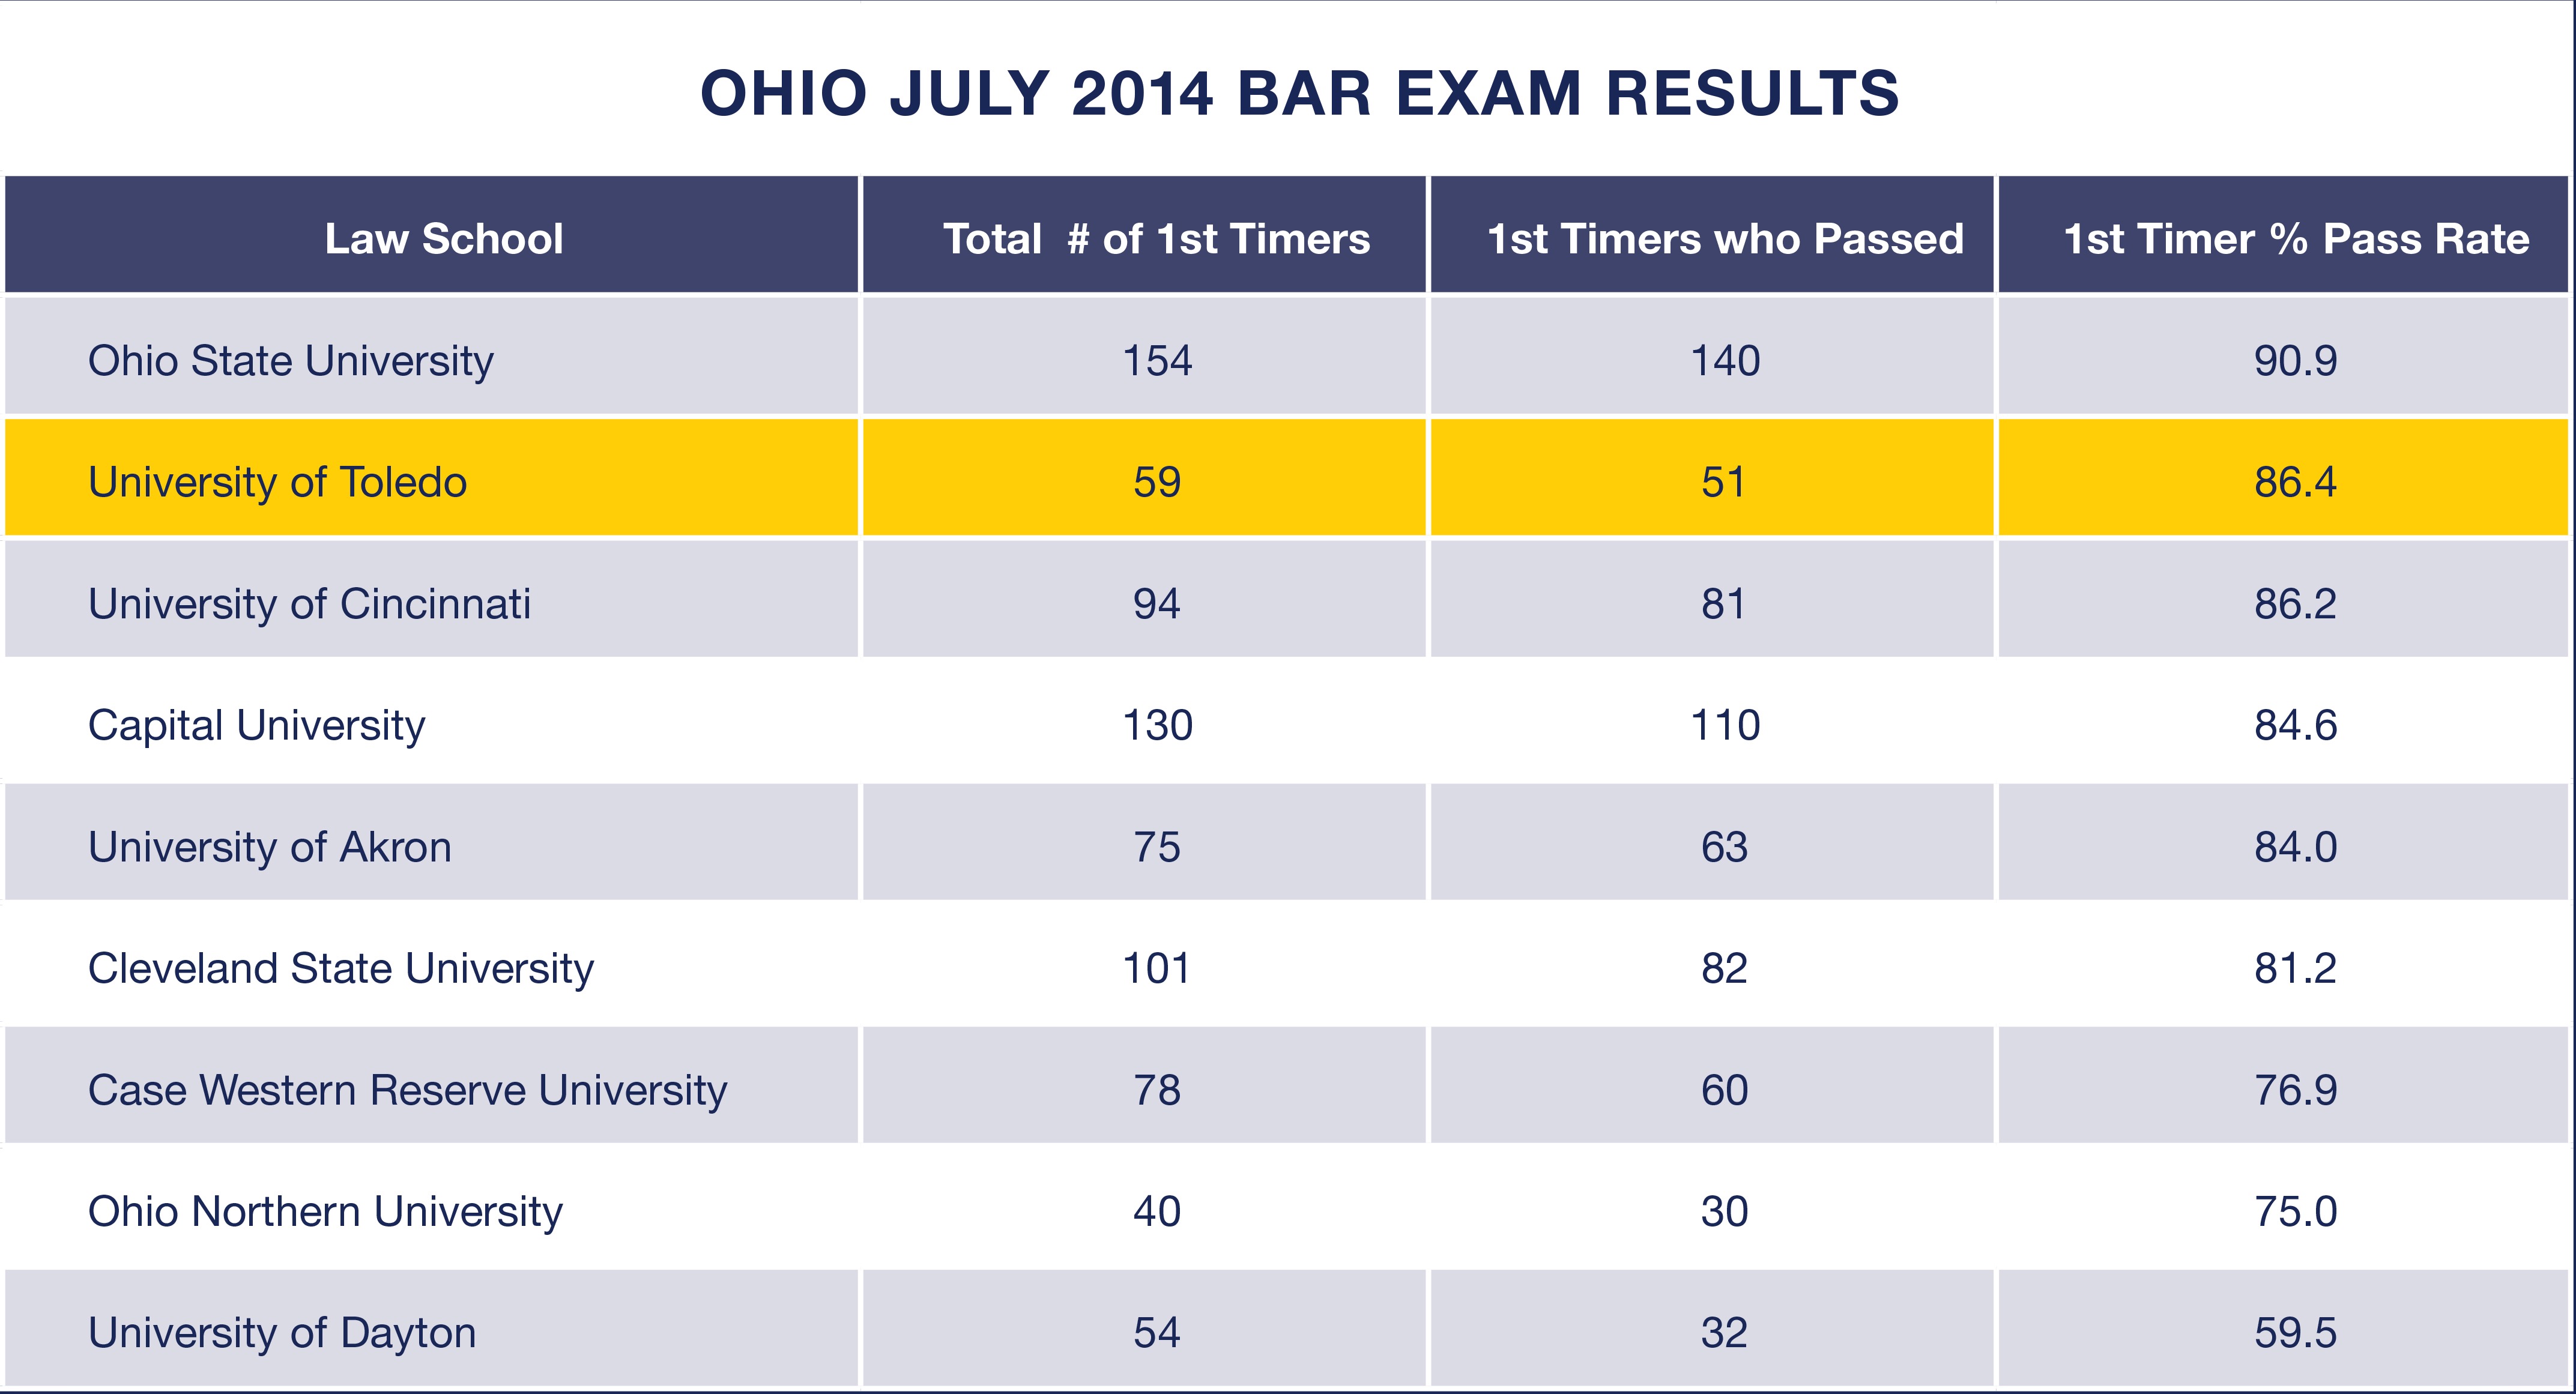 Ohio July 2014 Bar Exam Results